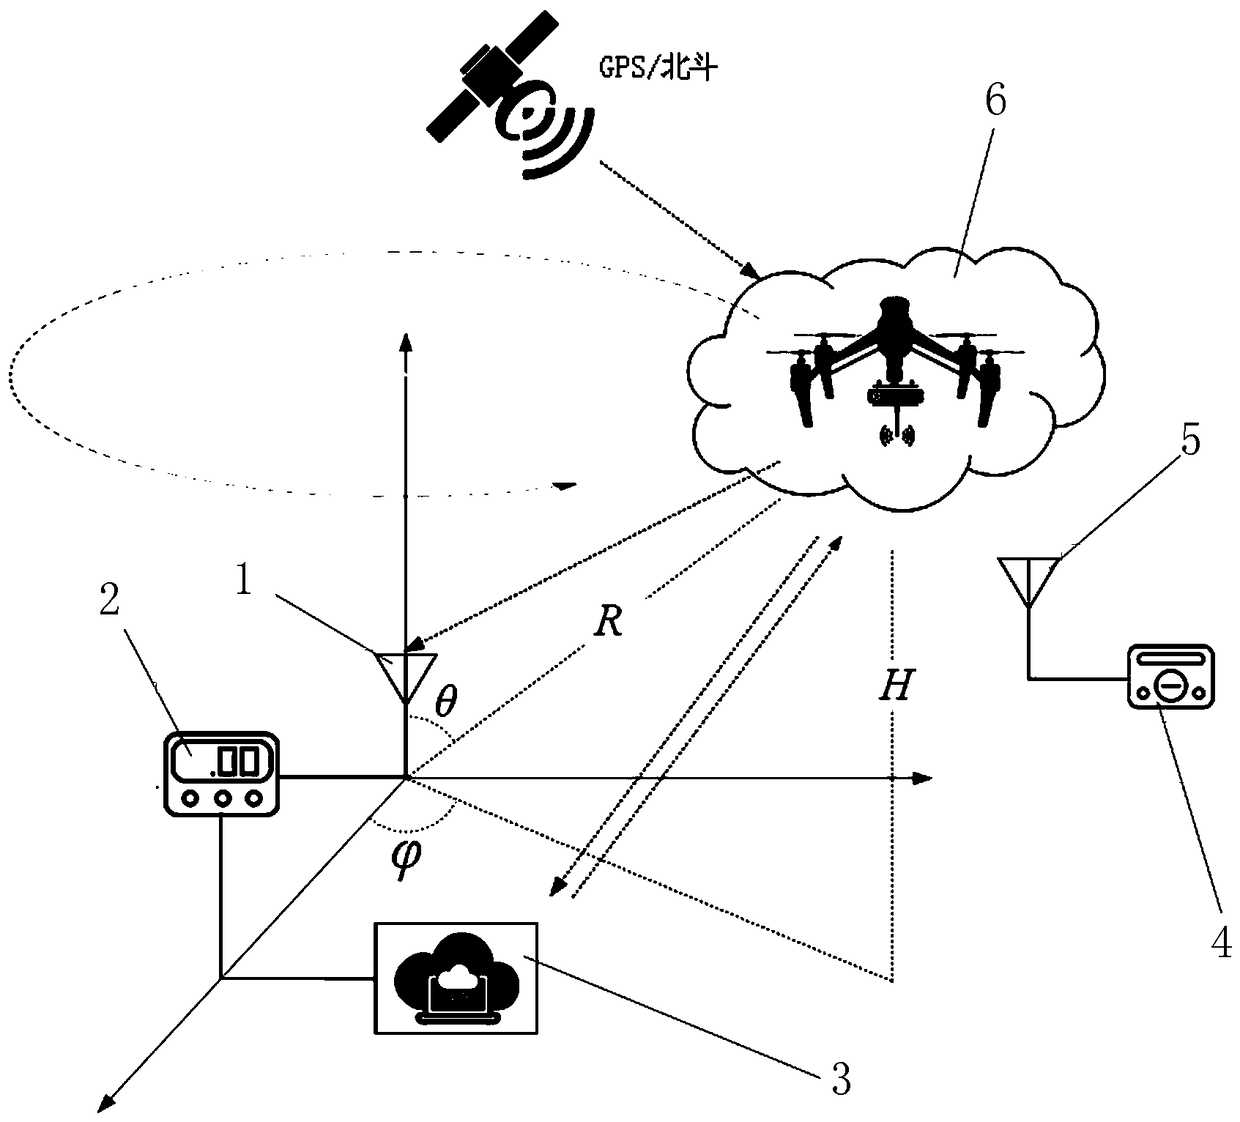 Antenna radiation pattern measuring system based on unmanned aerial vehicle platform